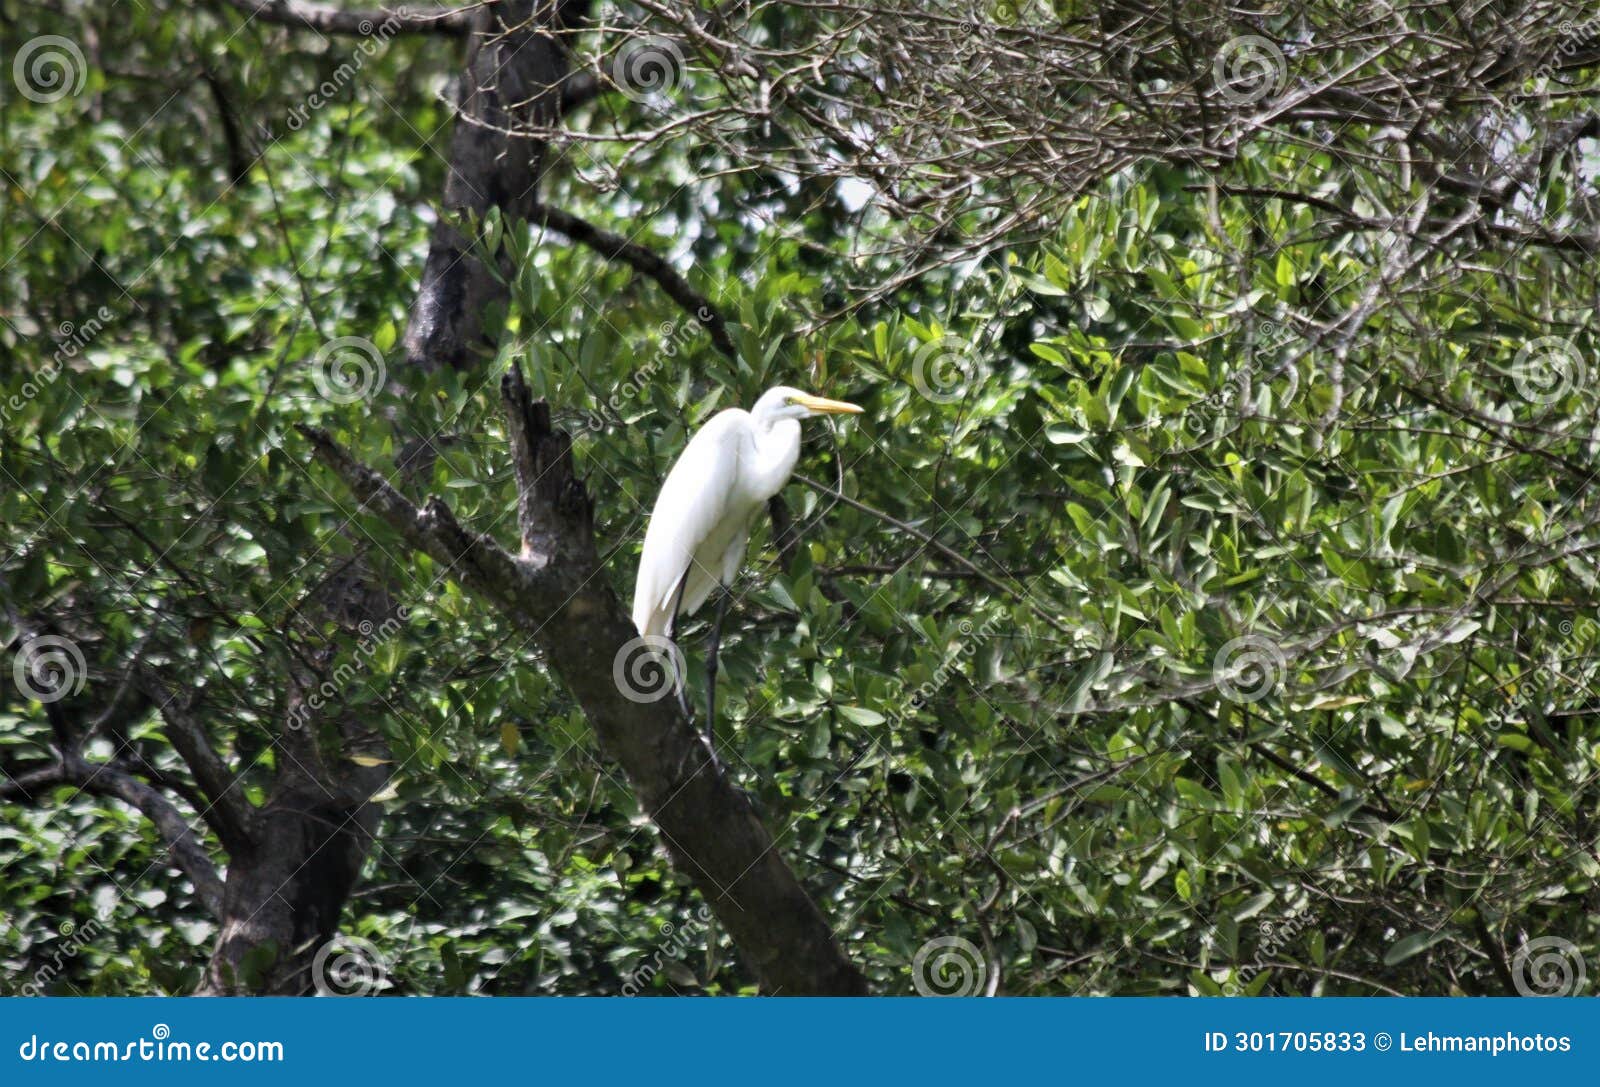 egret bird in the trees at isla de salamanca, colombia